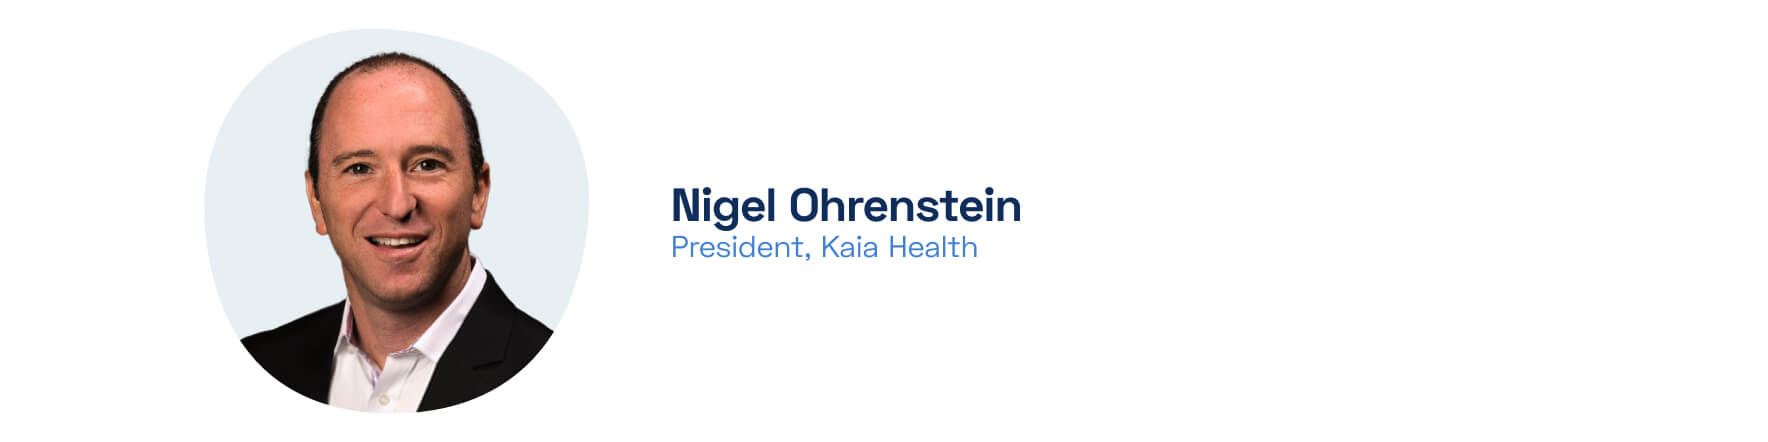 Profile photo of Nigel Ohrenstein Kaia Health's President.